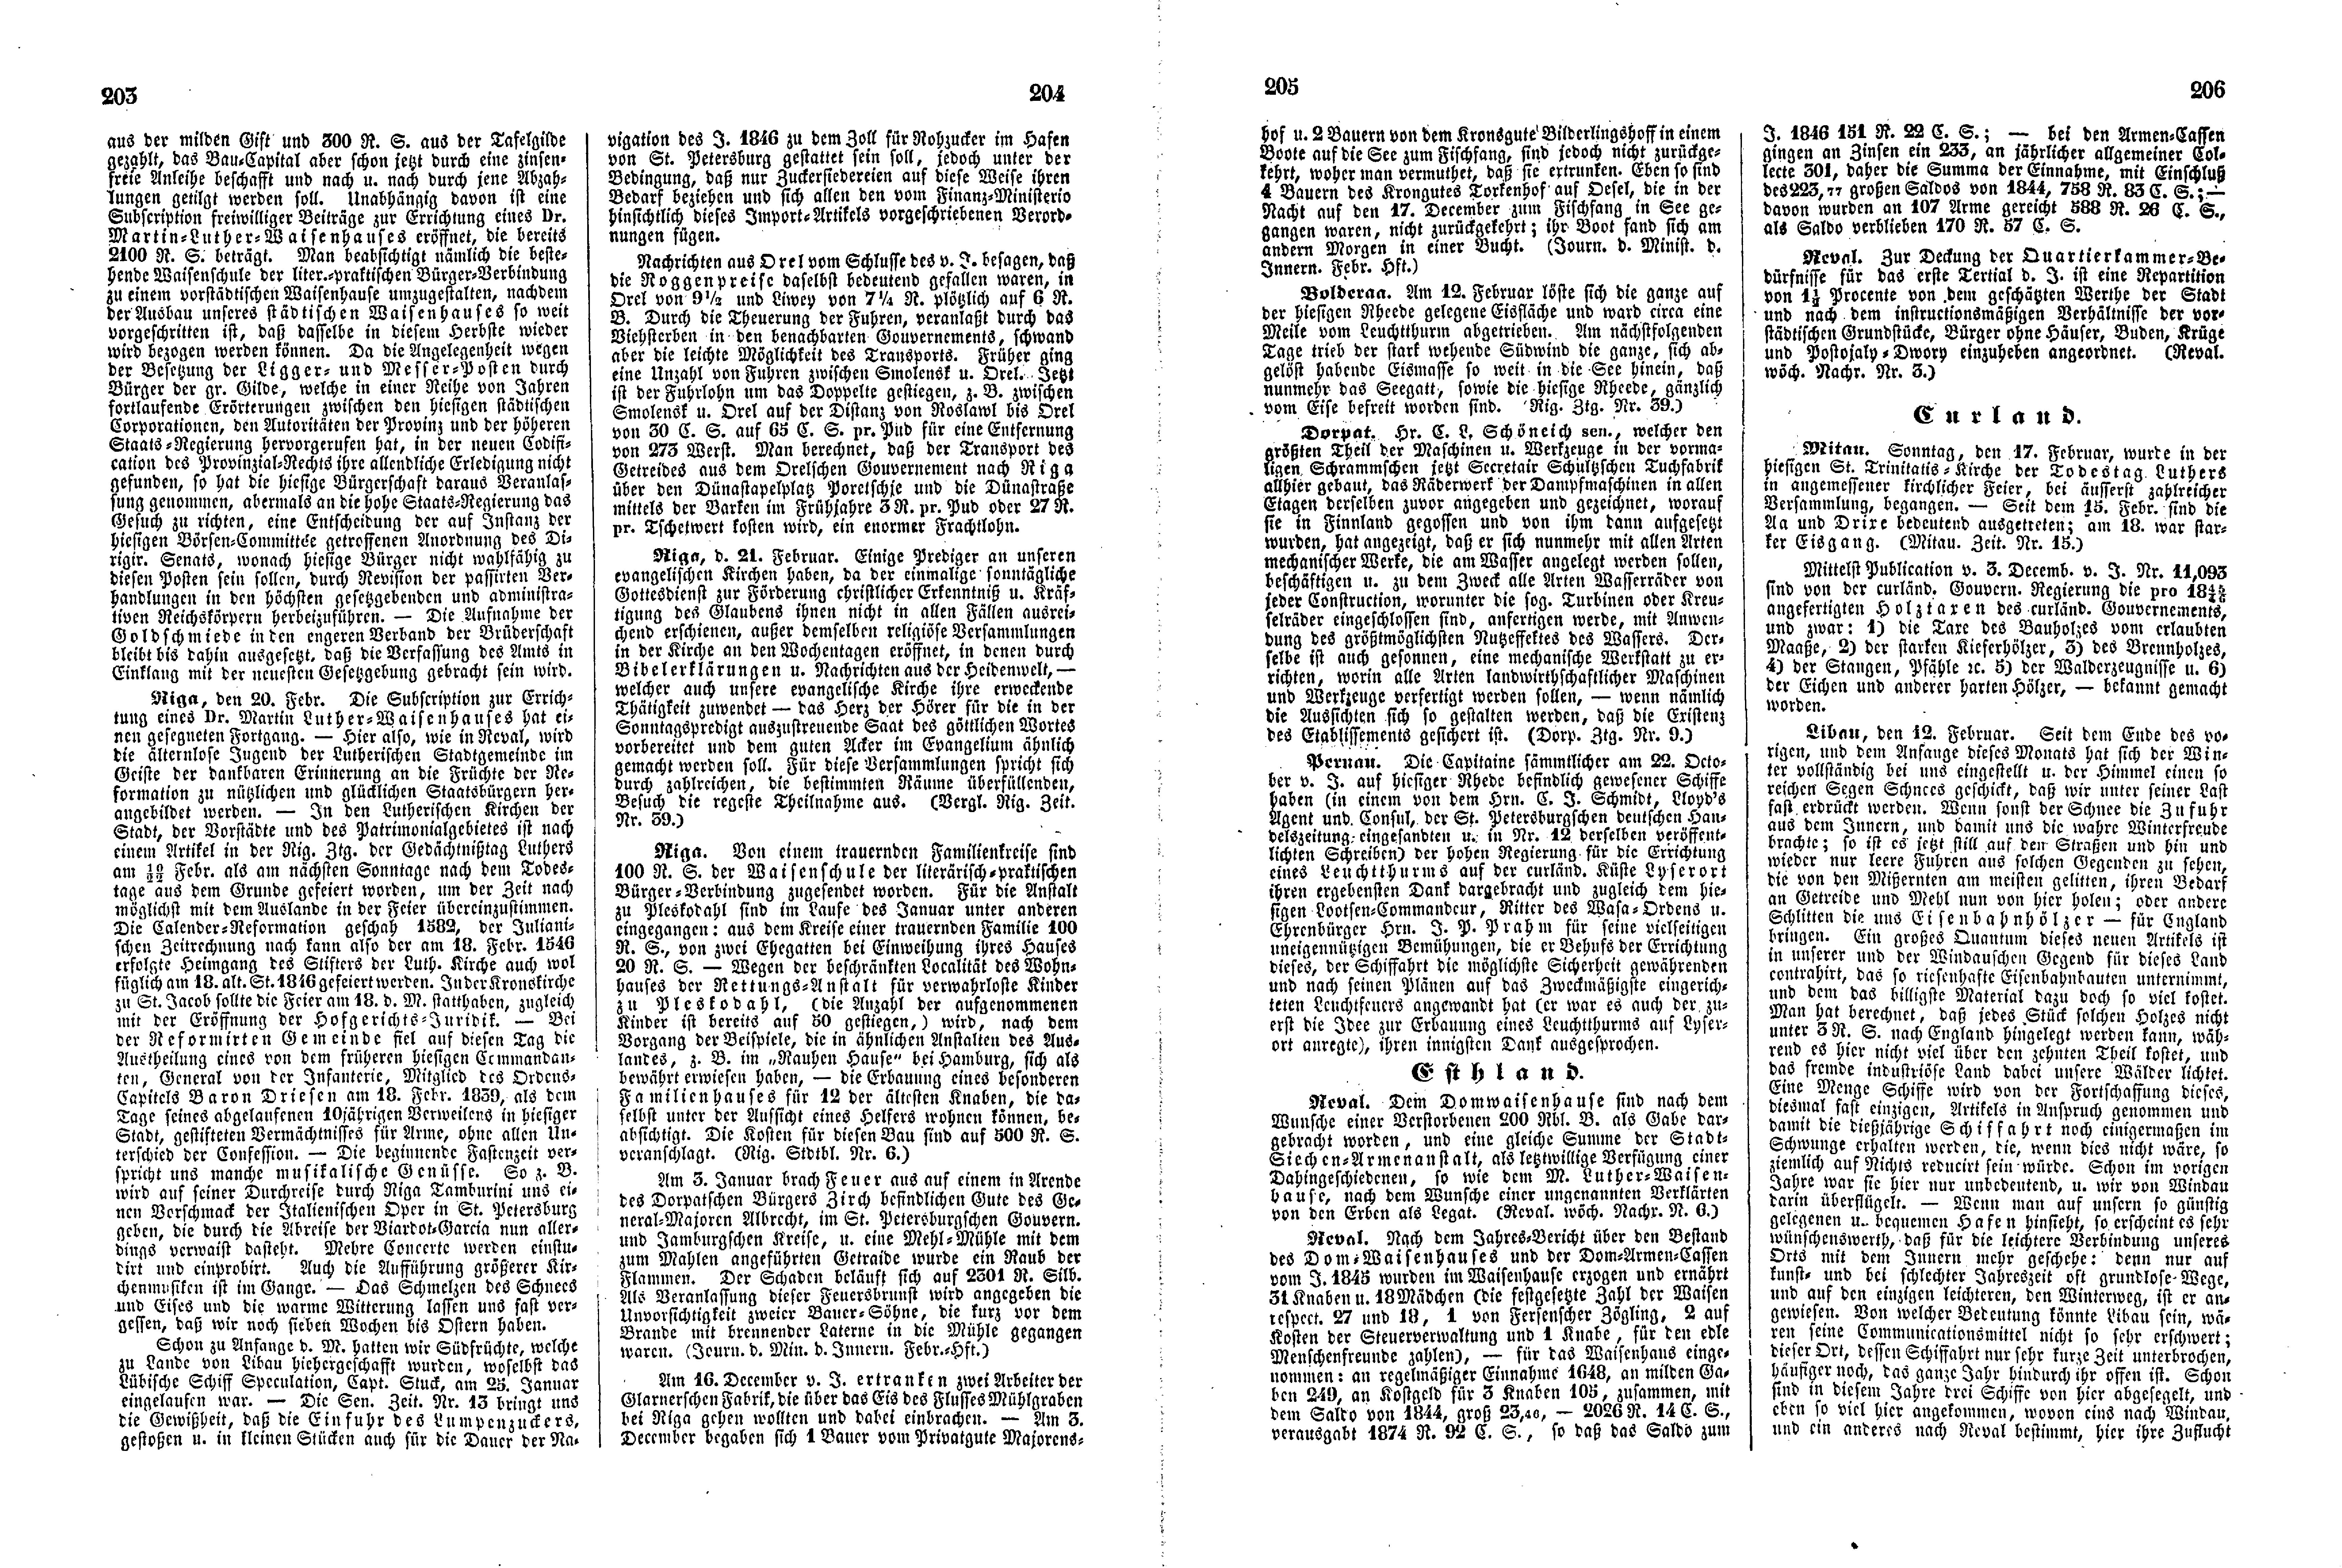 Das Inland [11] (1846) | 56. (203-206) Main body of text